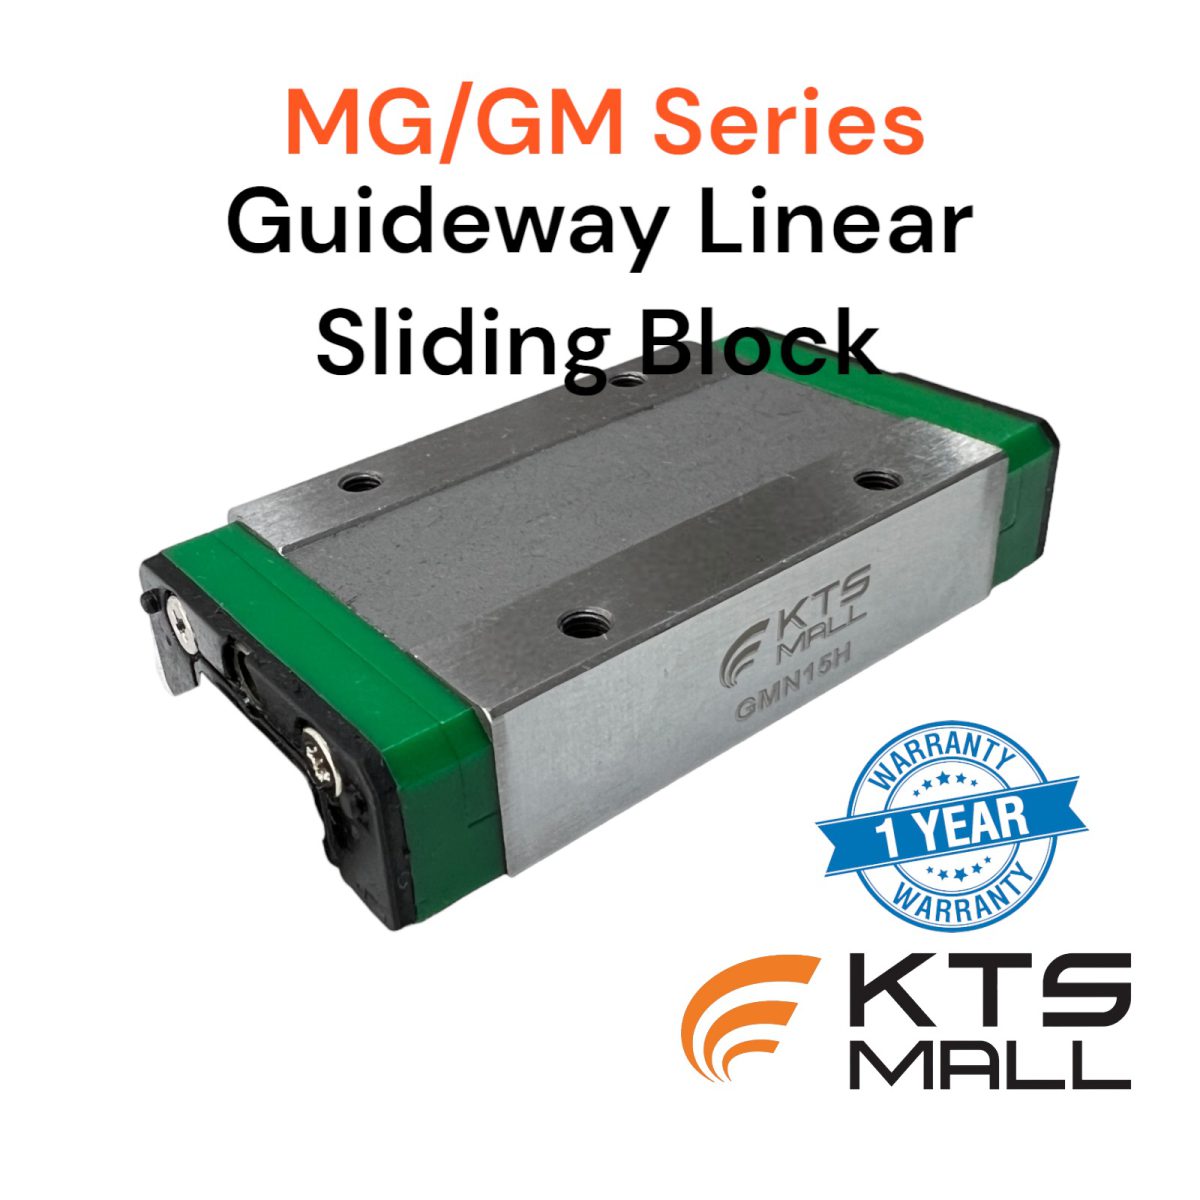 MGN sliding block